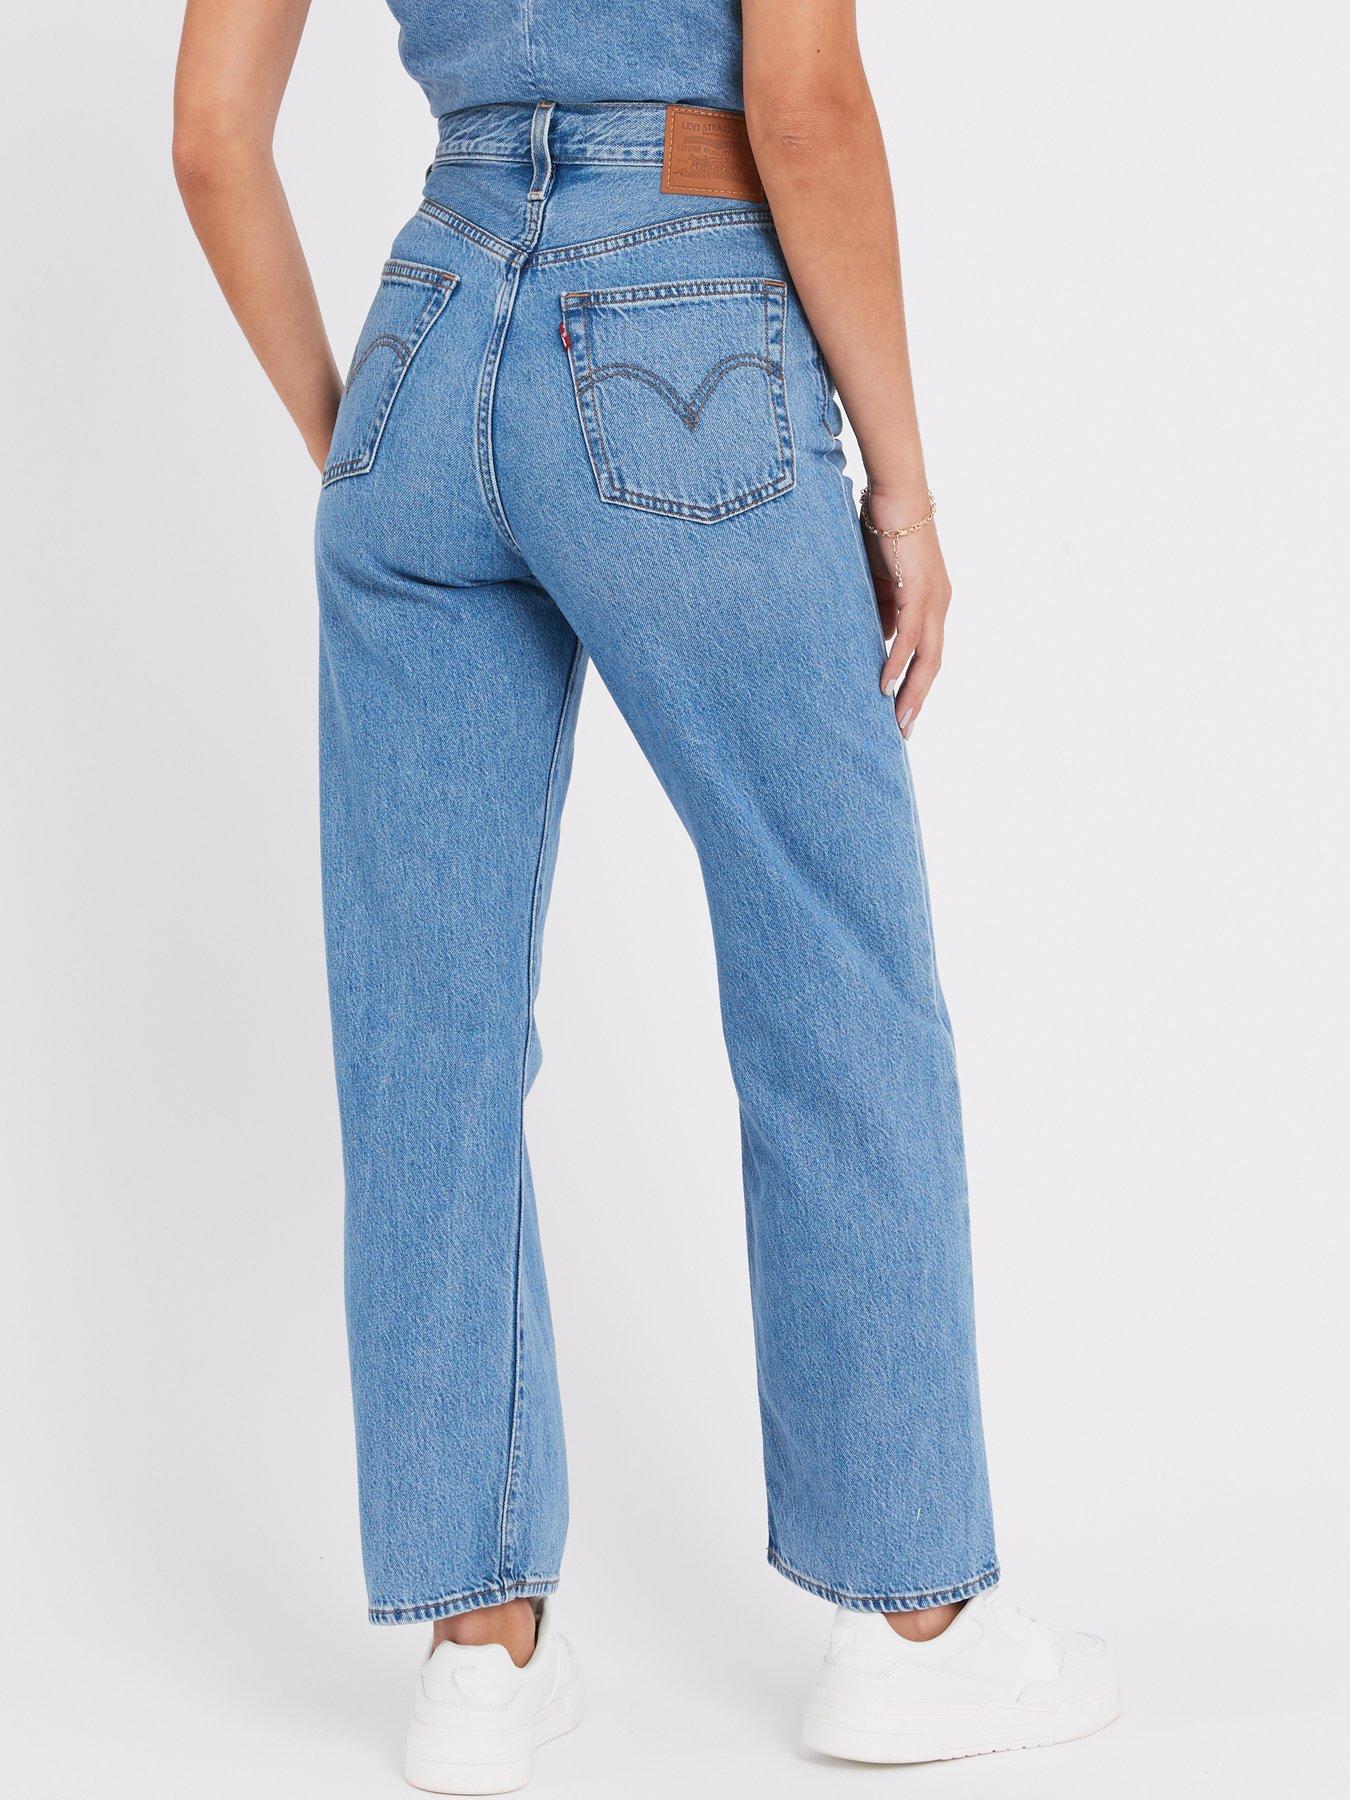 Ladies Work Pants Susan Fit® - Size 10 Regular - 3 Pairs Used